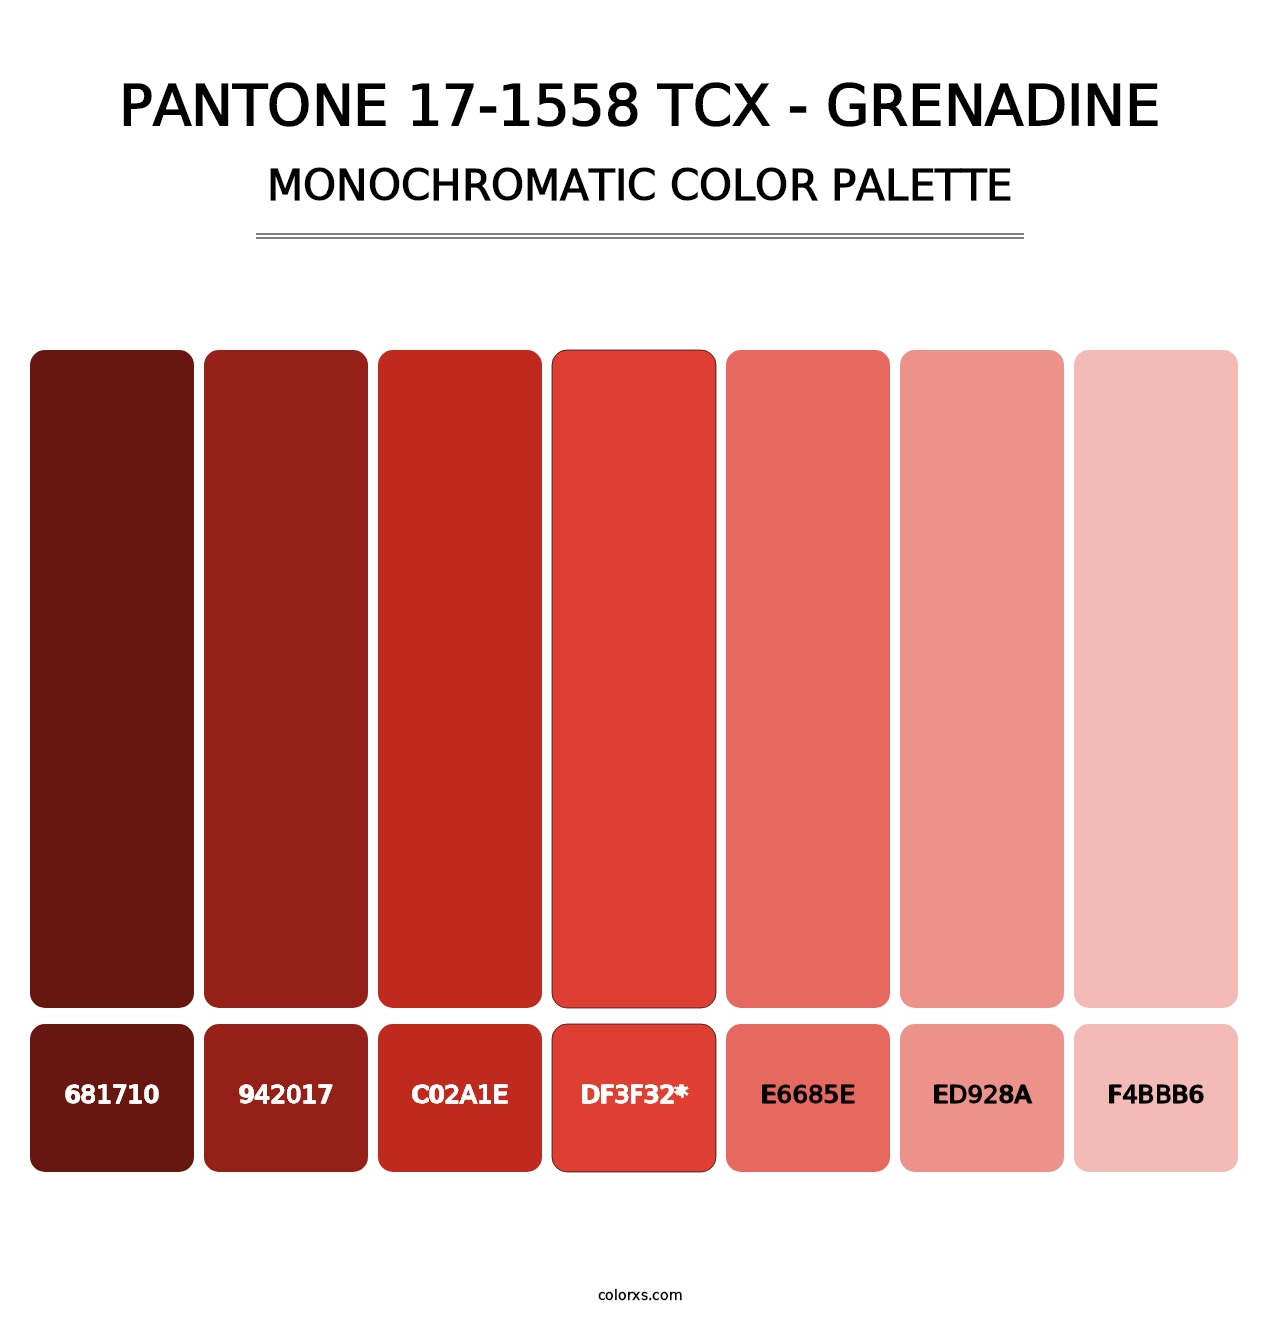 PANTONE 17-1558 TCX - Grenadine - Monochromatic Color Palette